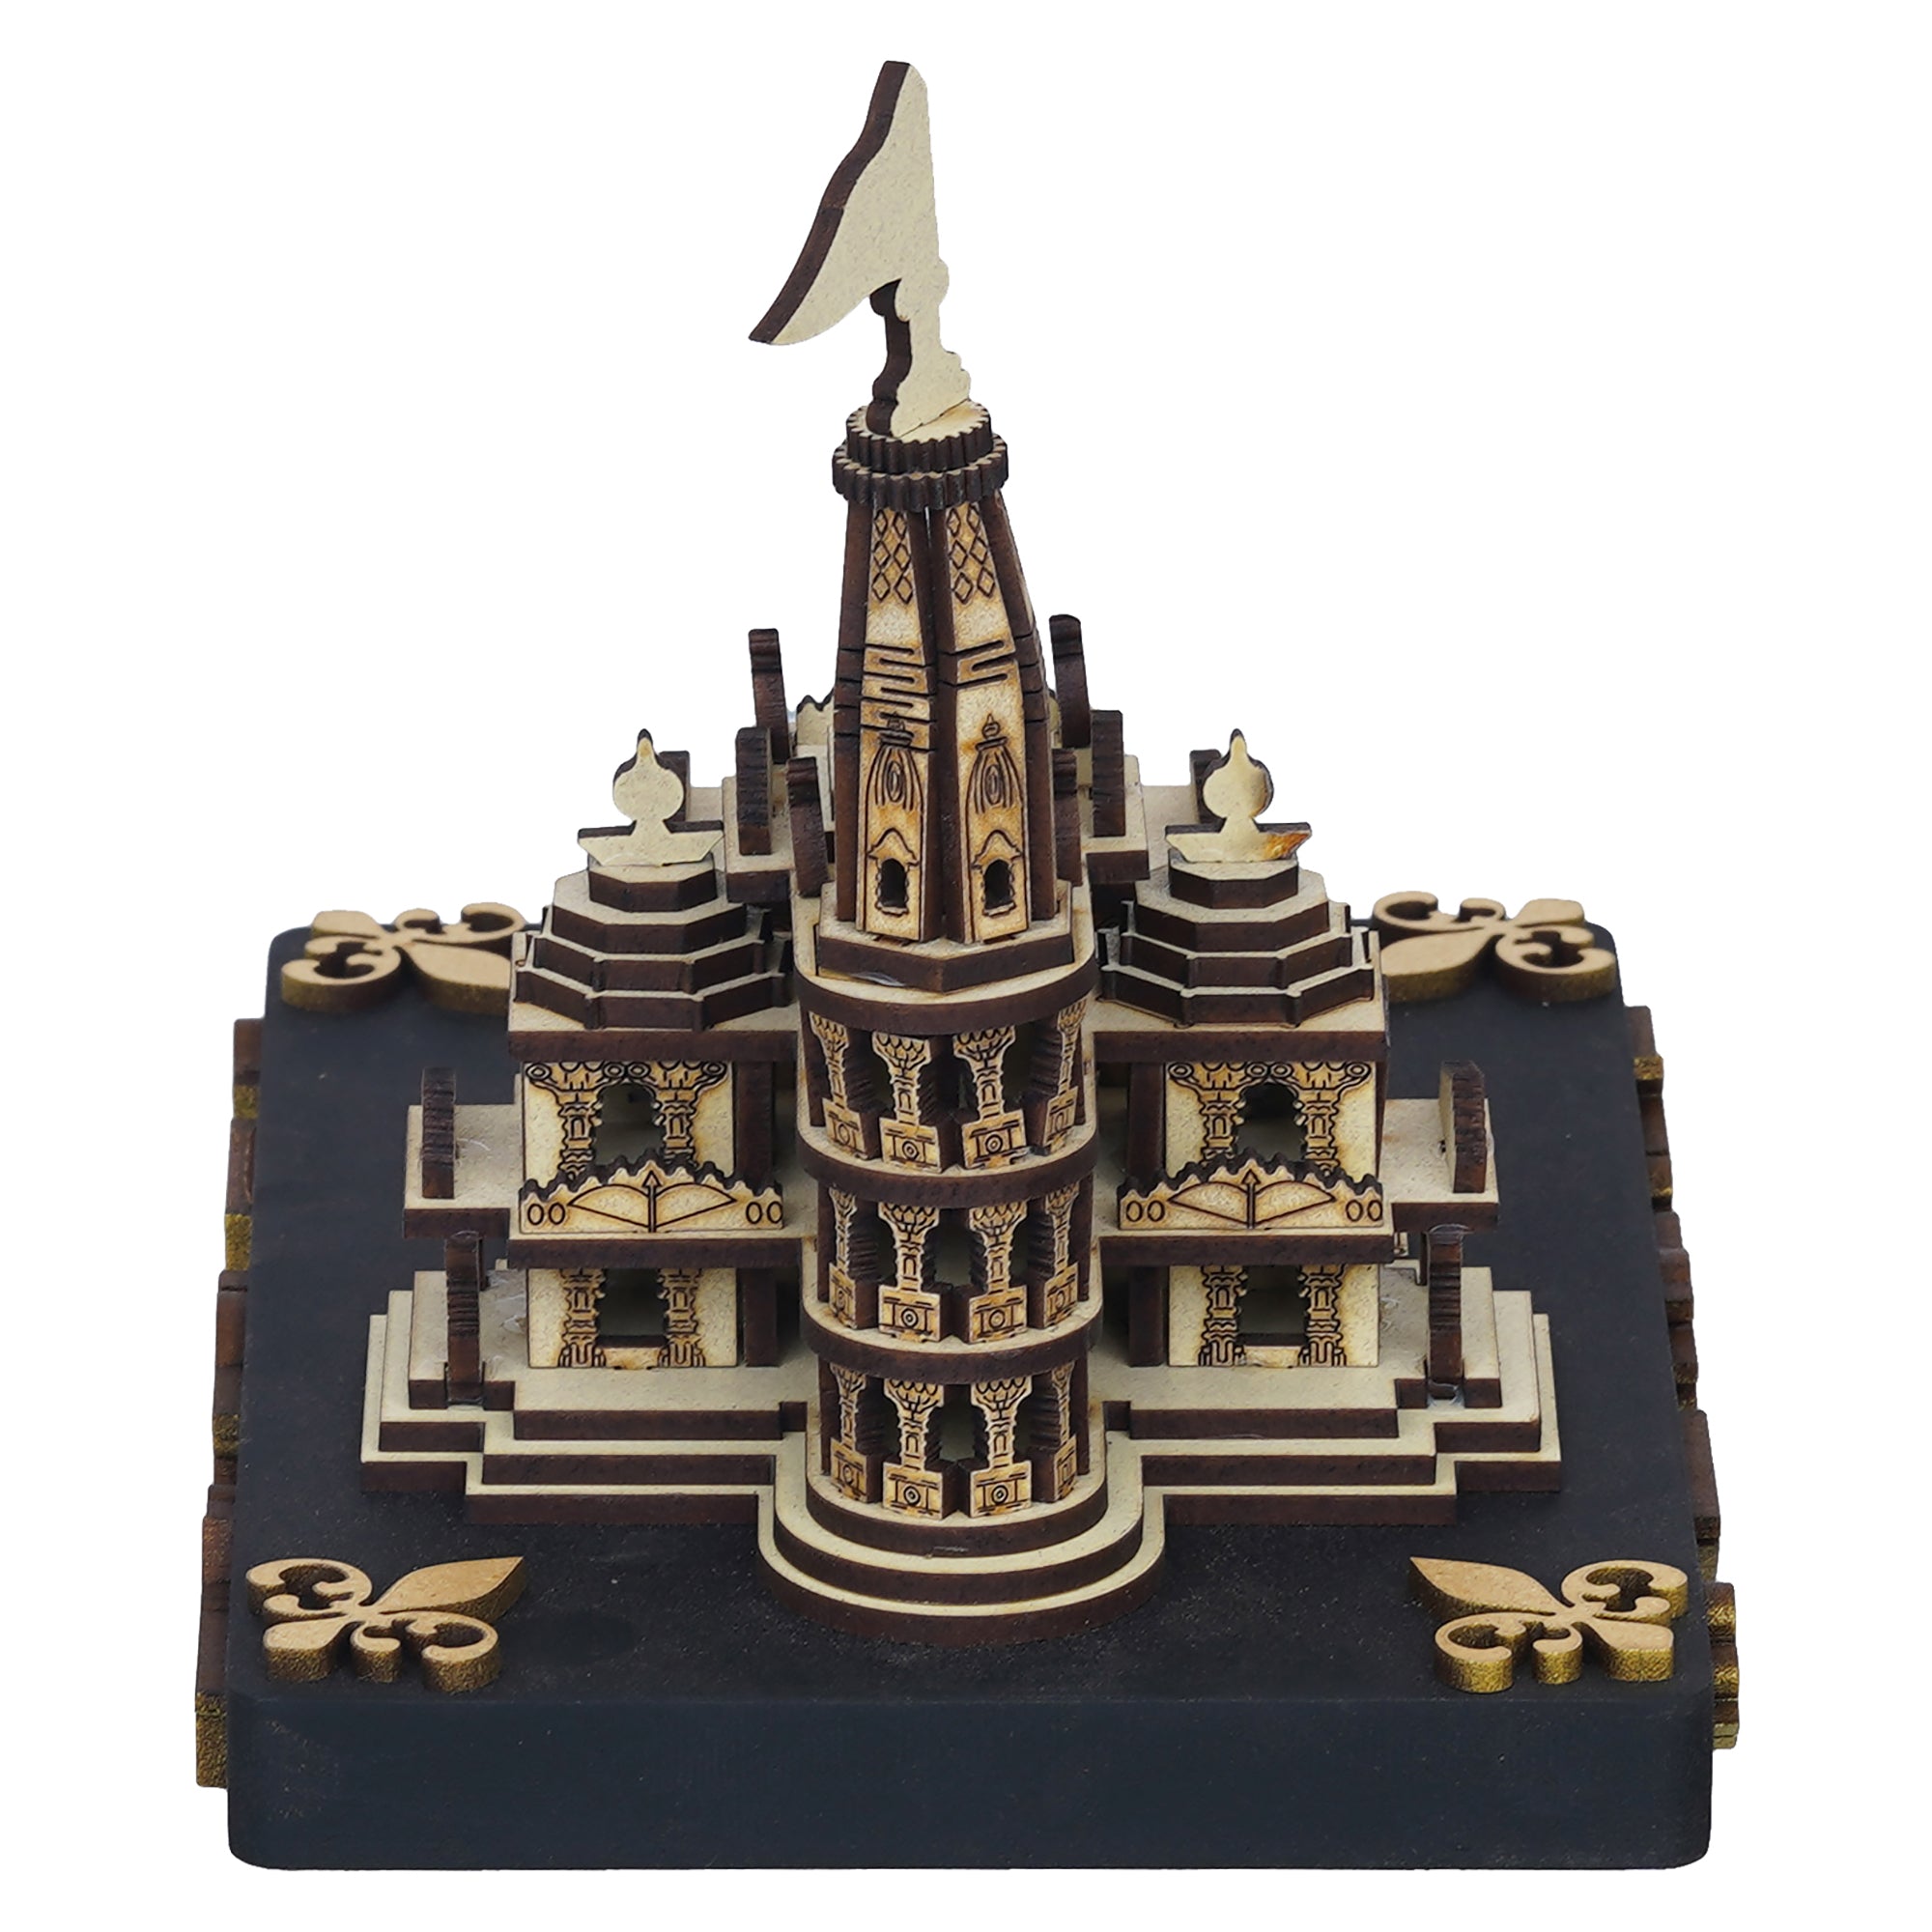 eCraftIndia Shri Ram Mandir Ayodhya Model - Wooden MDF Craftsmanship Authentic Designer Temple - Ideal for Home Temple, Decor, and Spiritual Gifting (Beige, Gold) 8